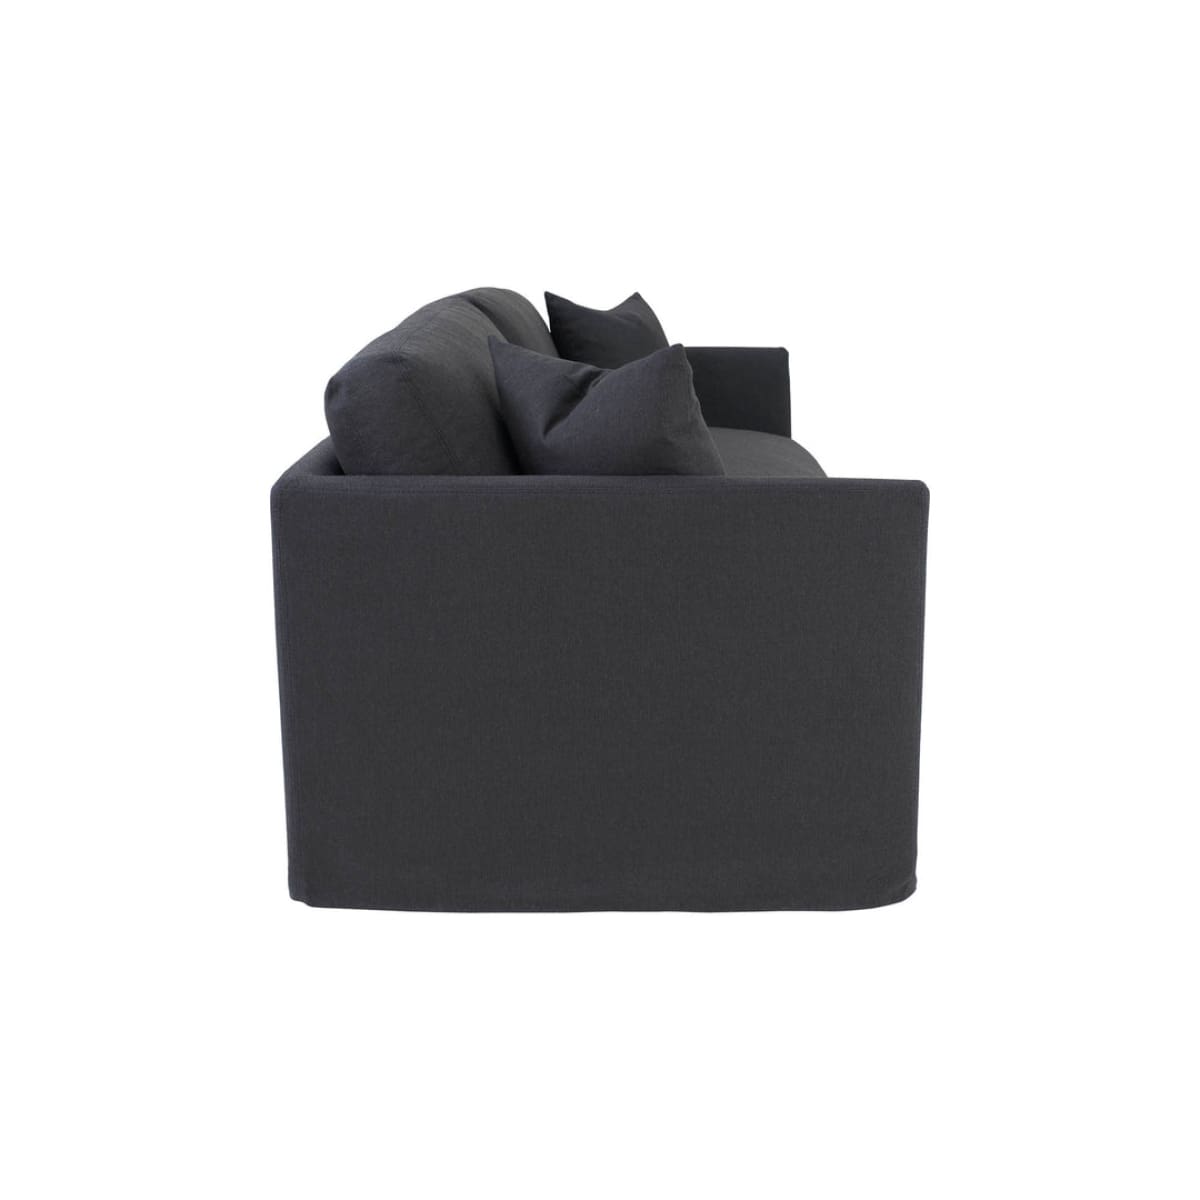 Heston Sofa - Black Fabric - lh-import-sofas